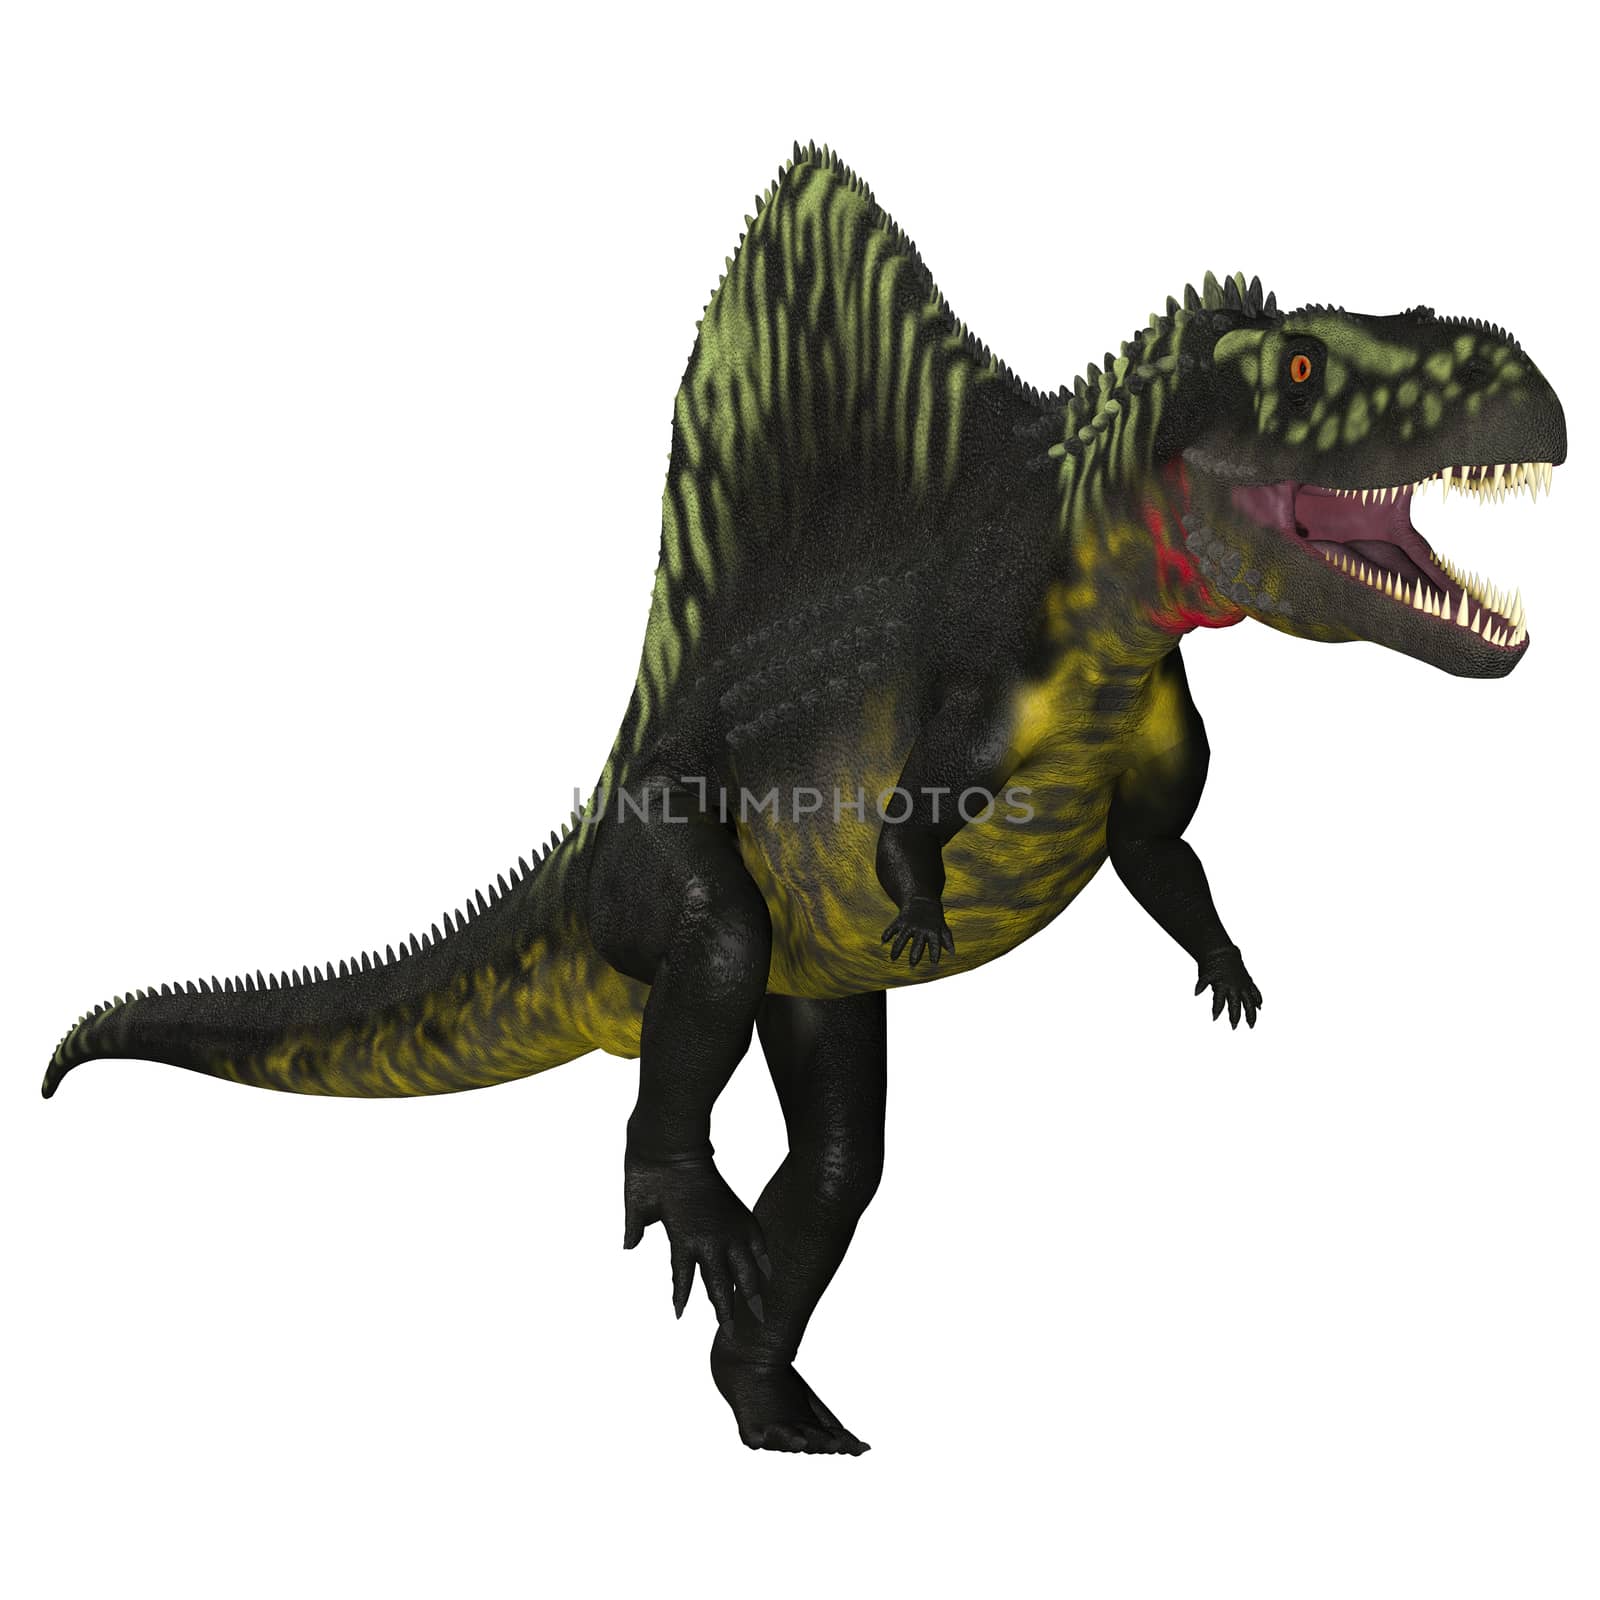 Arizonasaurus was a sailback carnivorous archosaur that lived in Arizona, North America in the Triassic Period.